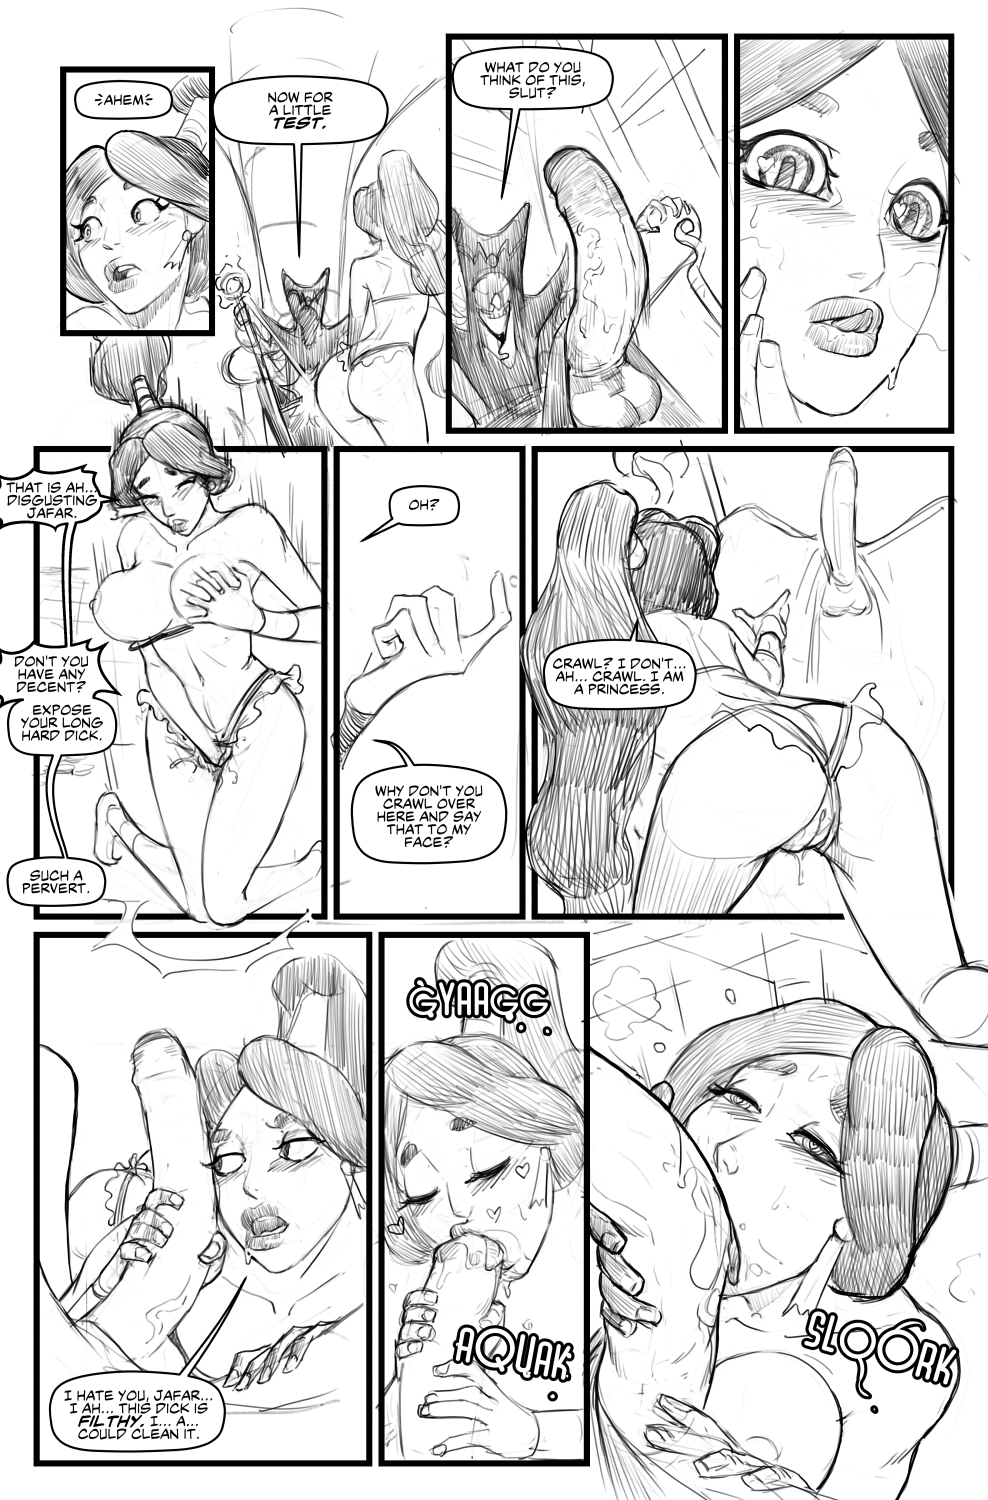 bimbo jasmine page 03